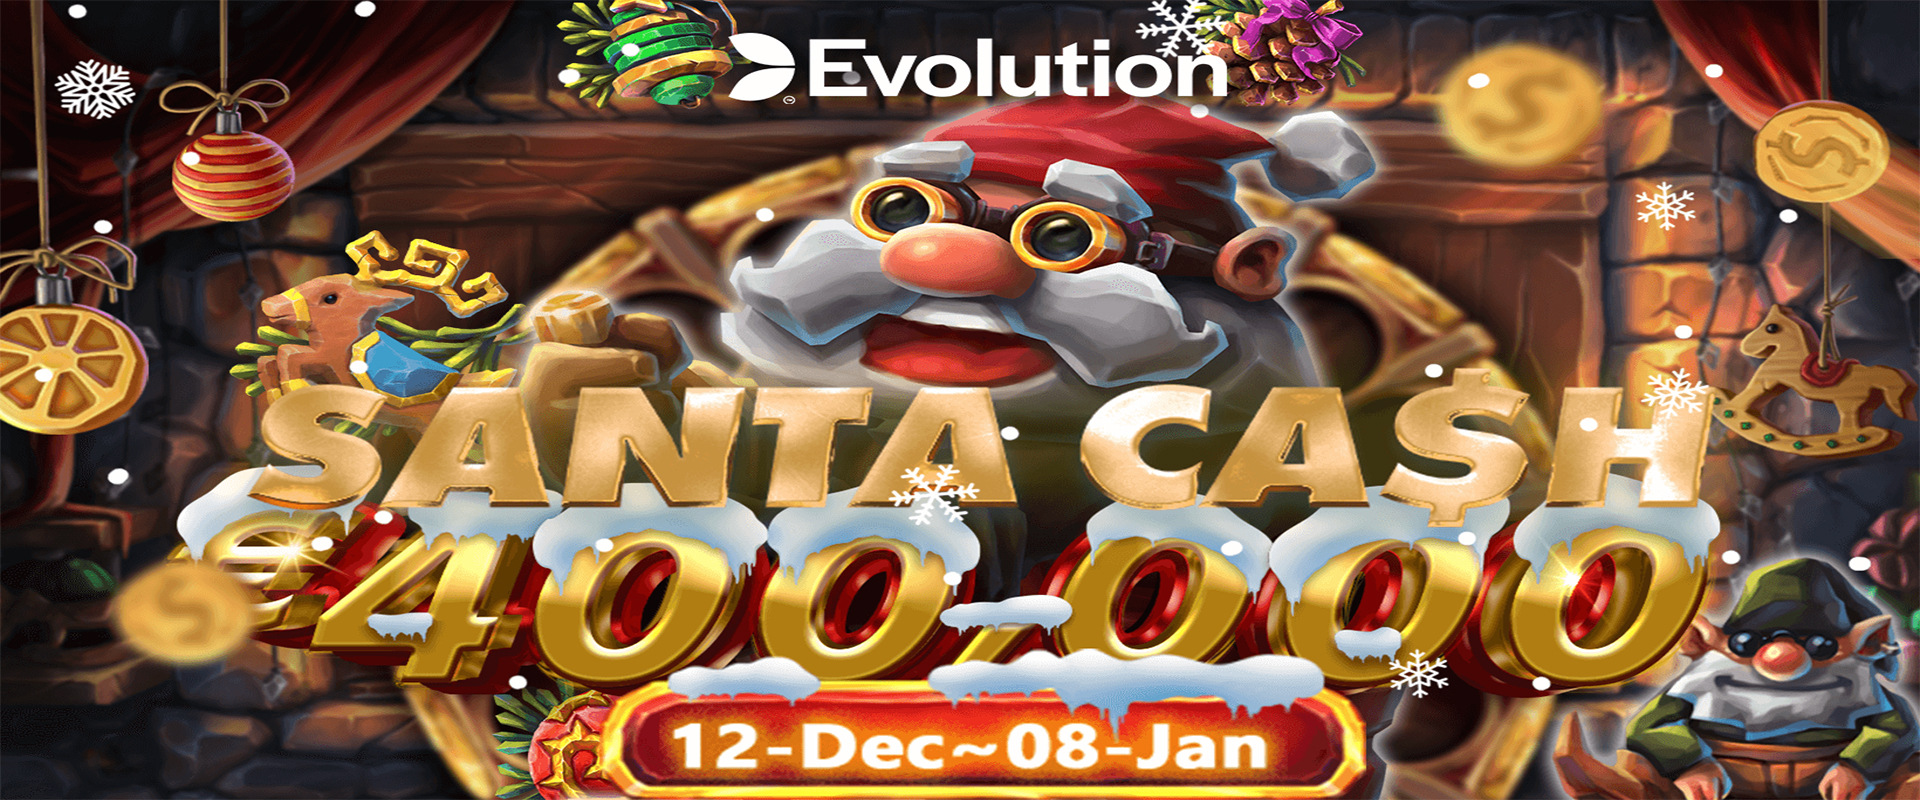 Rich- evolution santa cash